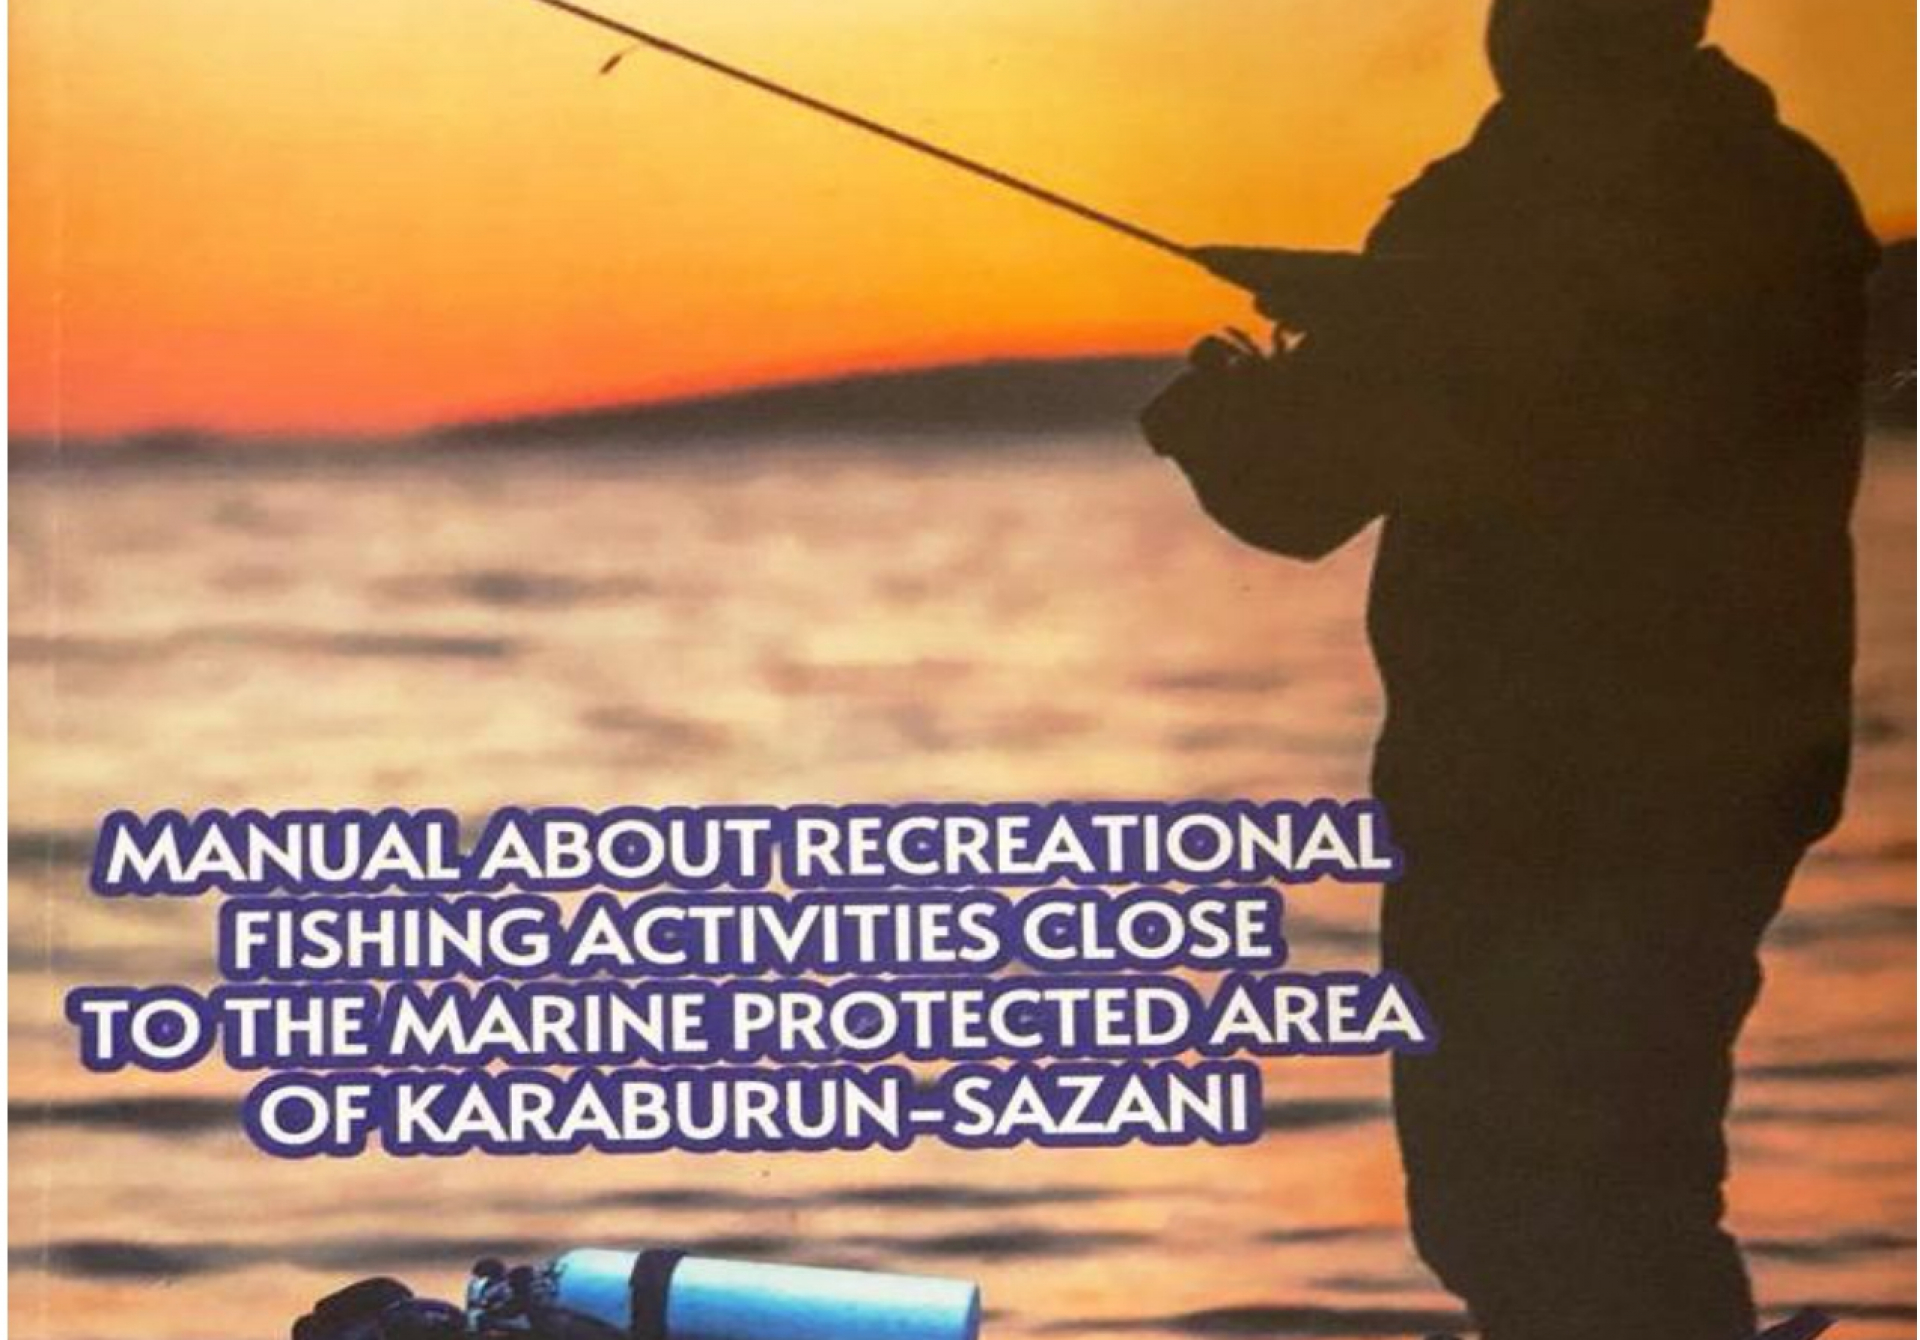 En_Manual about recreational fishing activities close to the MPA of Karaburun-Sazani